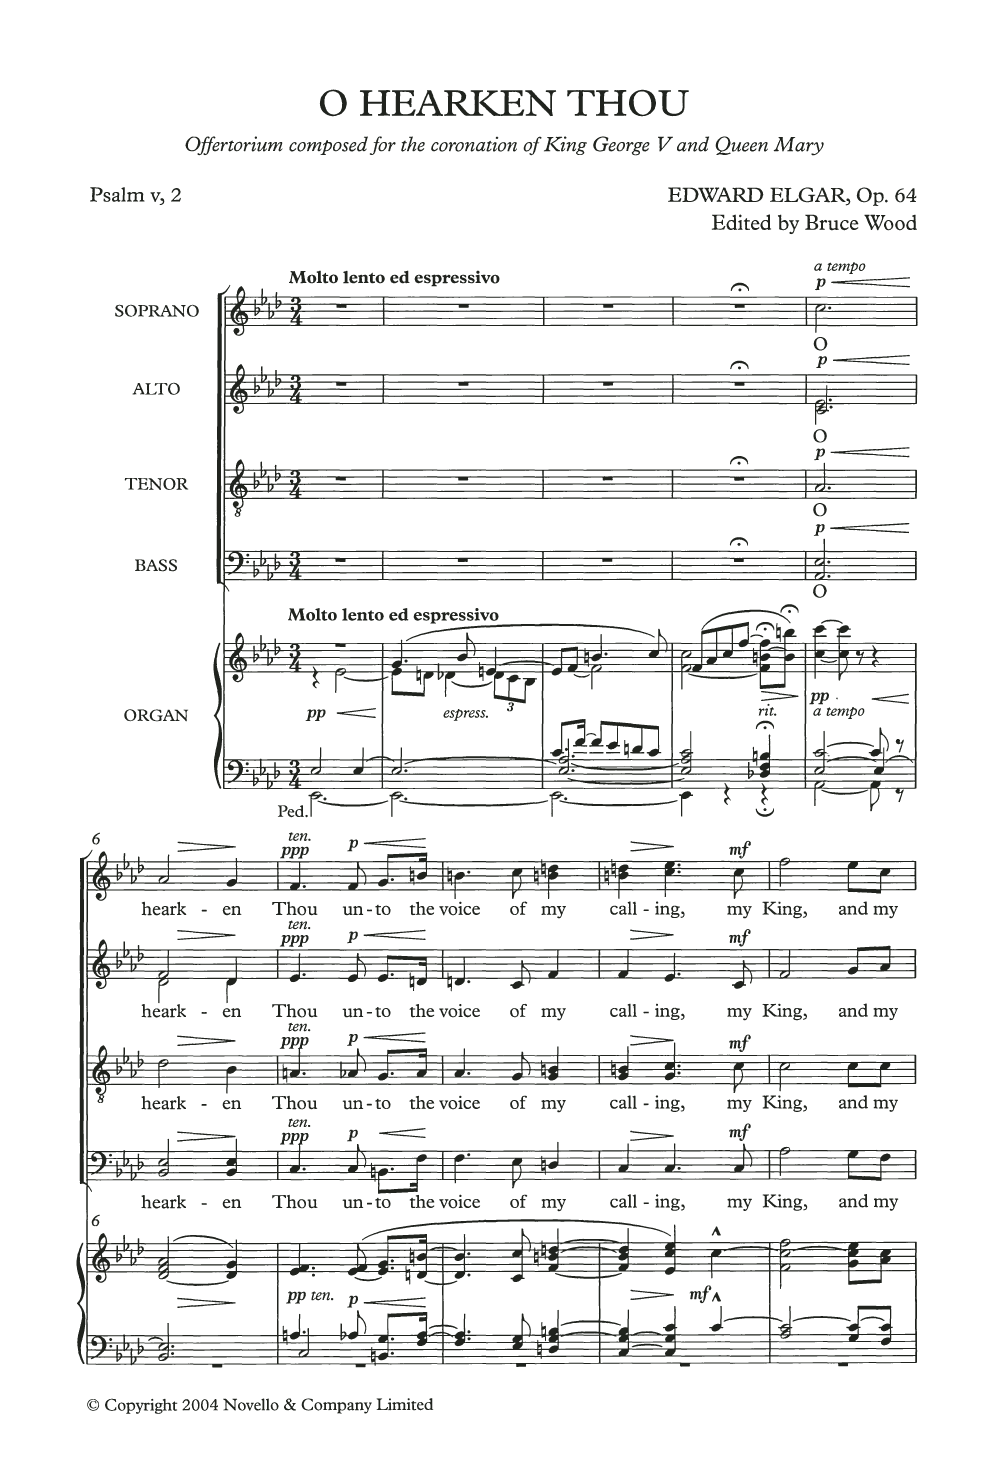 Download Edward Elgar O Hearken Thou Sheet Music